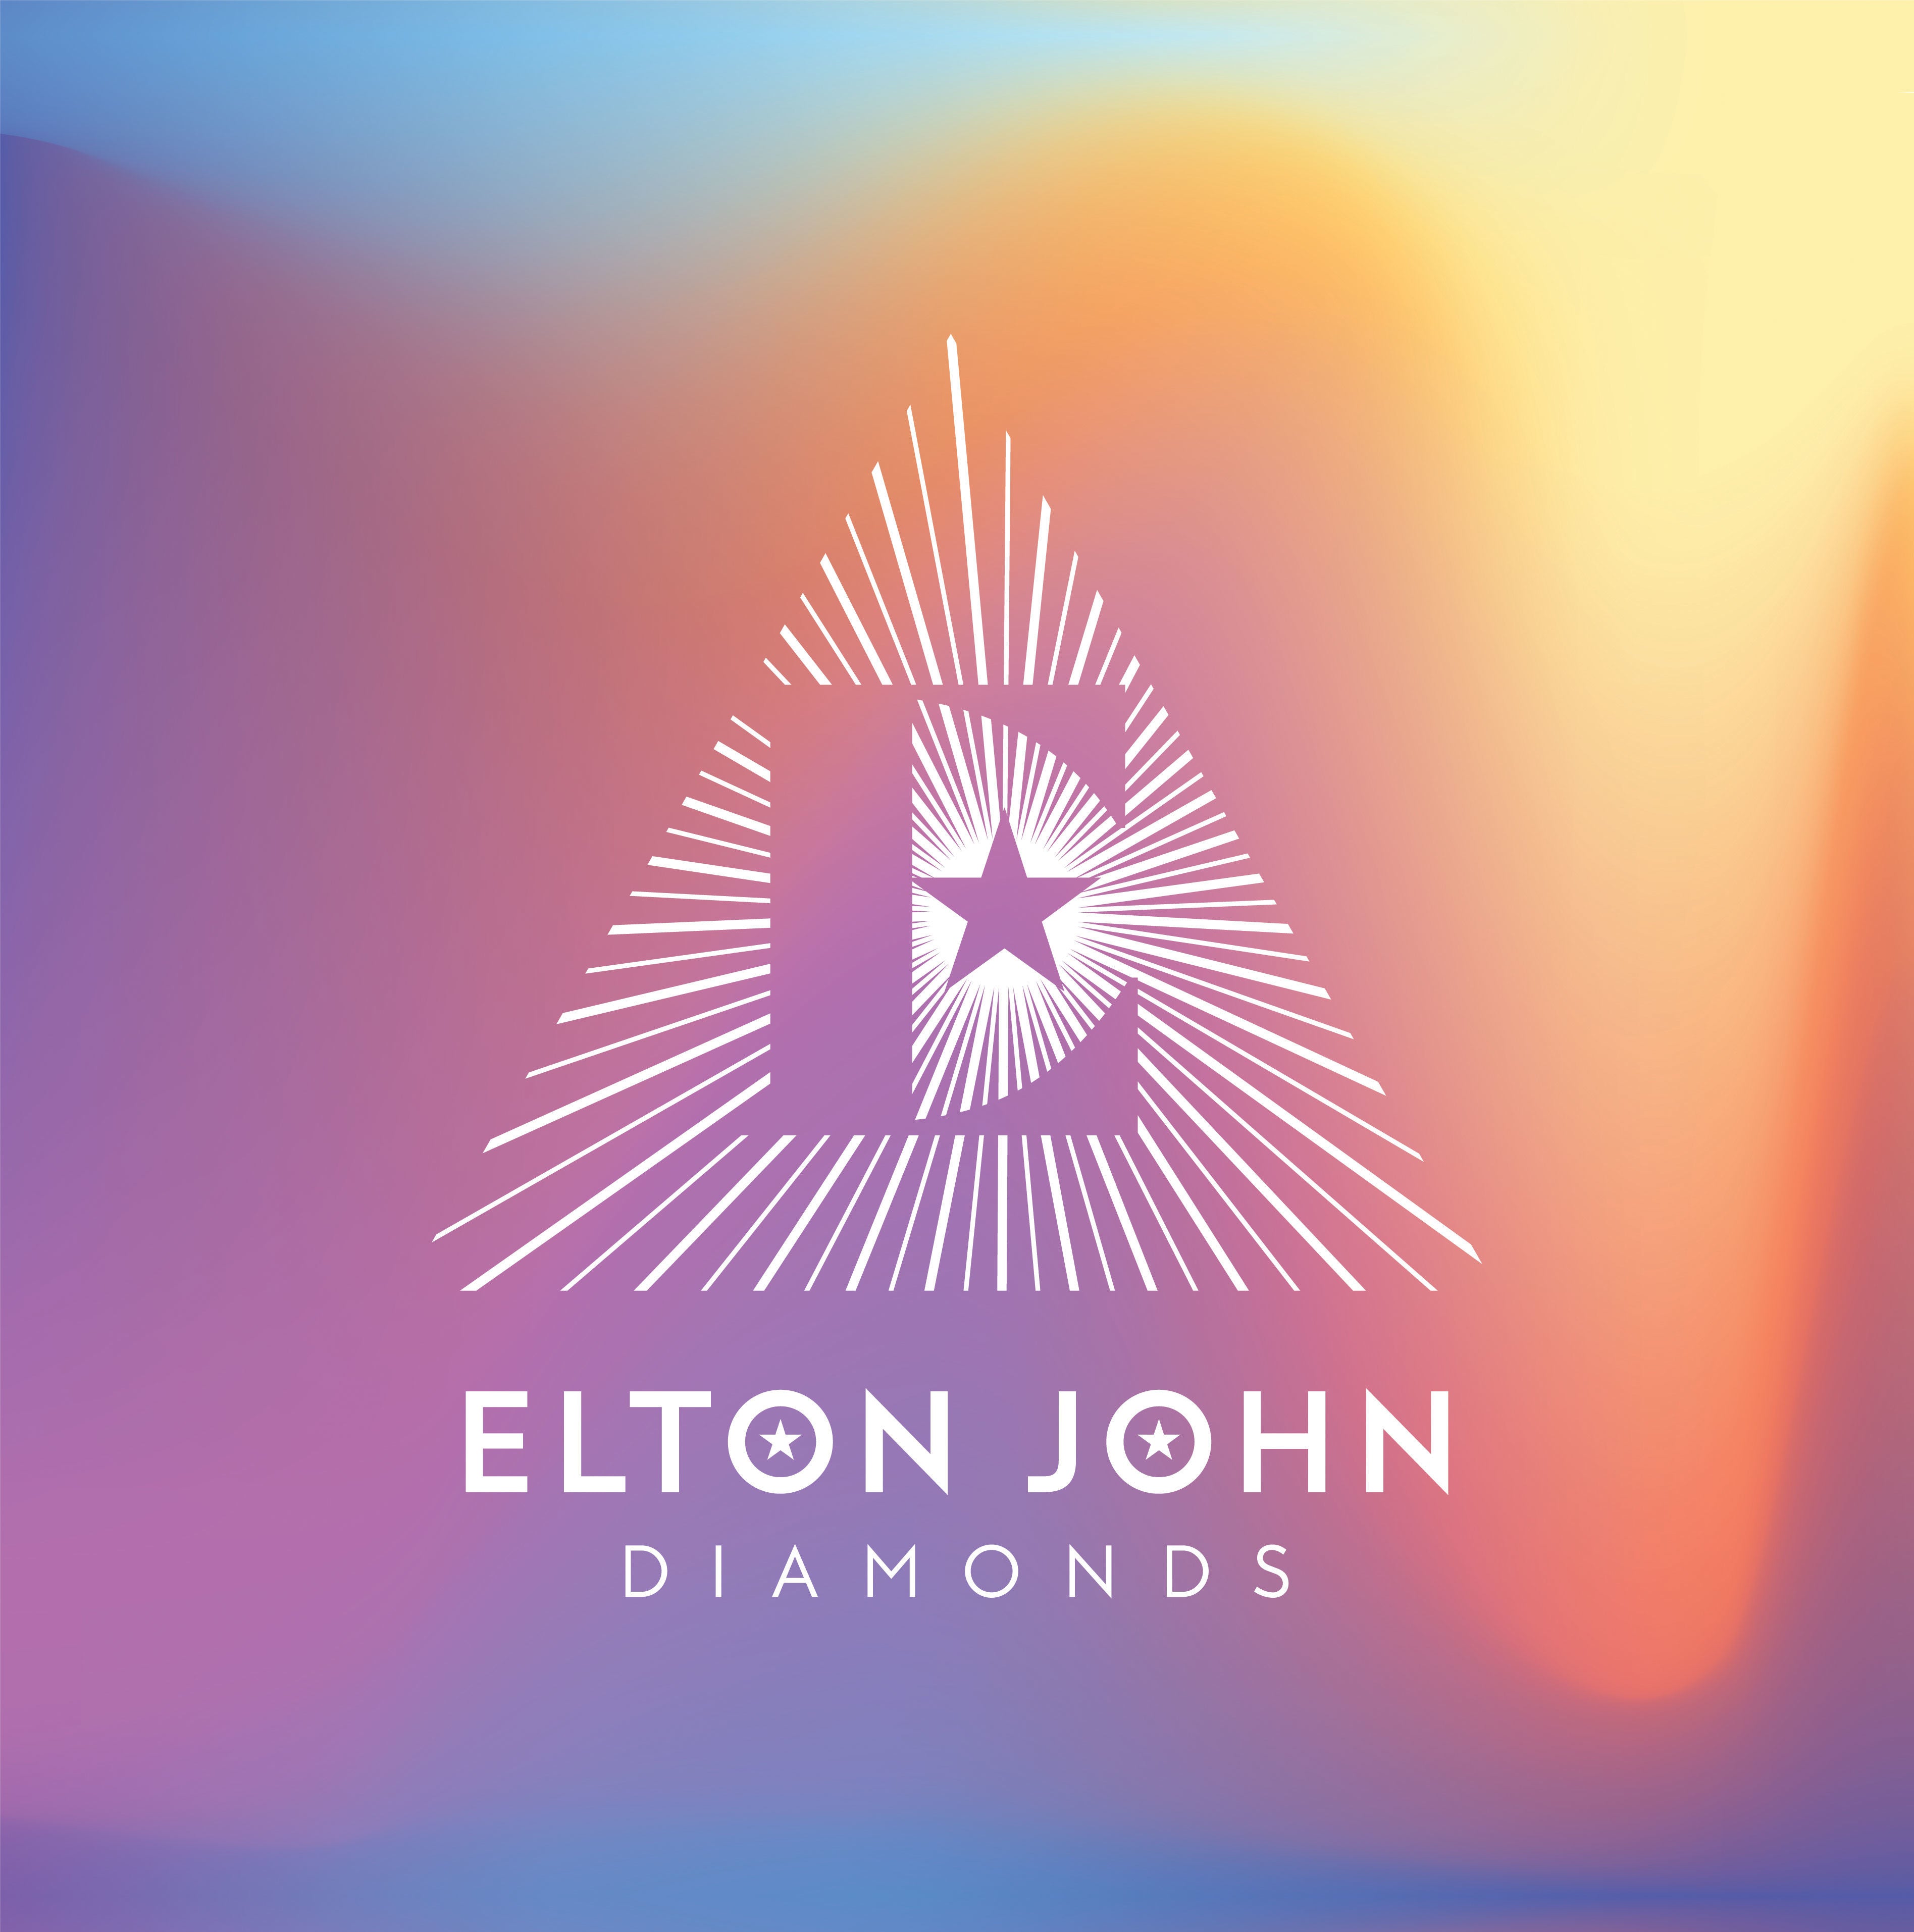 Elton John - Diamonds (Pyramid Edition): Limited Edition Vinyl LP